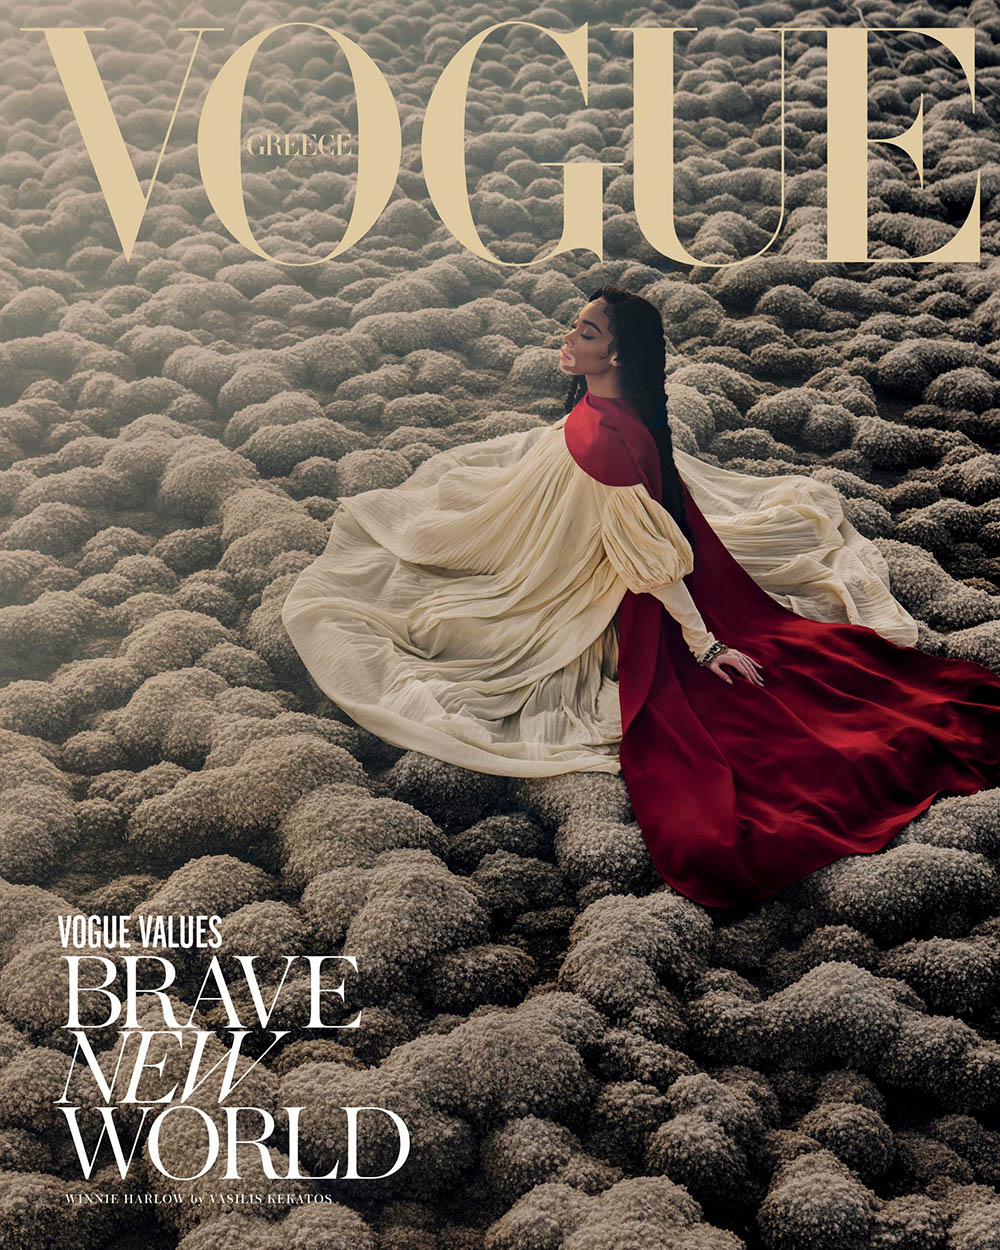 Winnie Harlow covers Vogue Greece February 2020 by Vasilis Kekatos